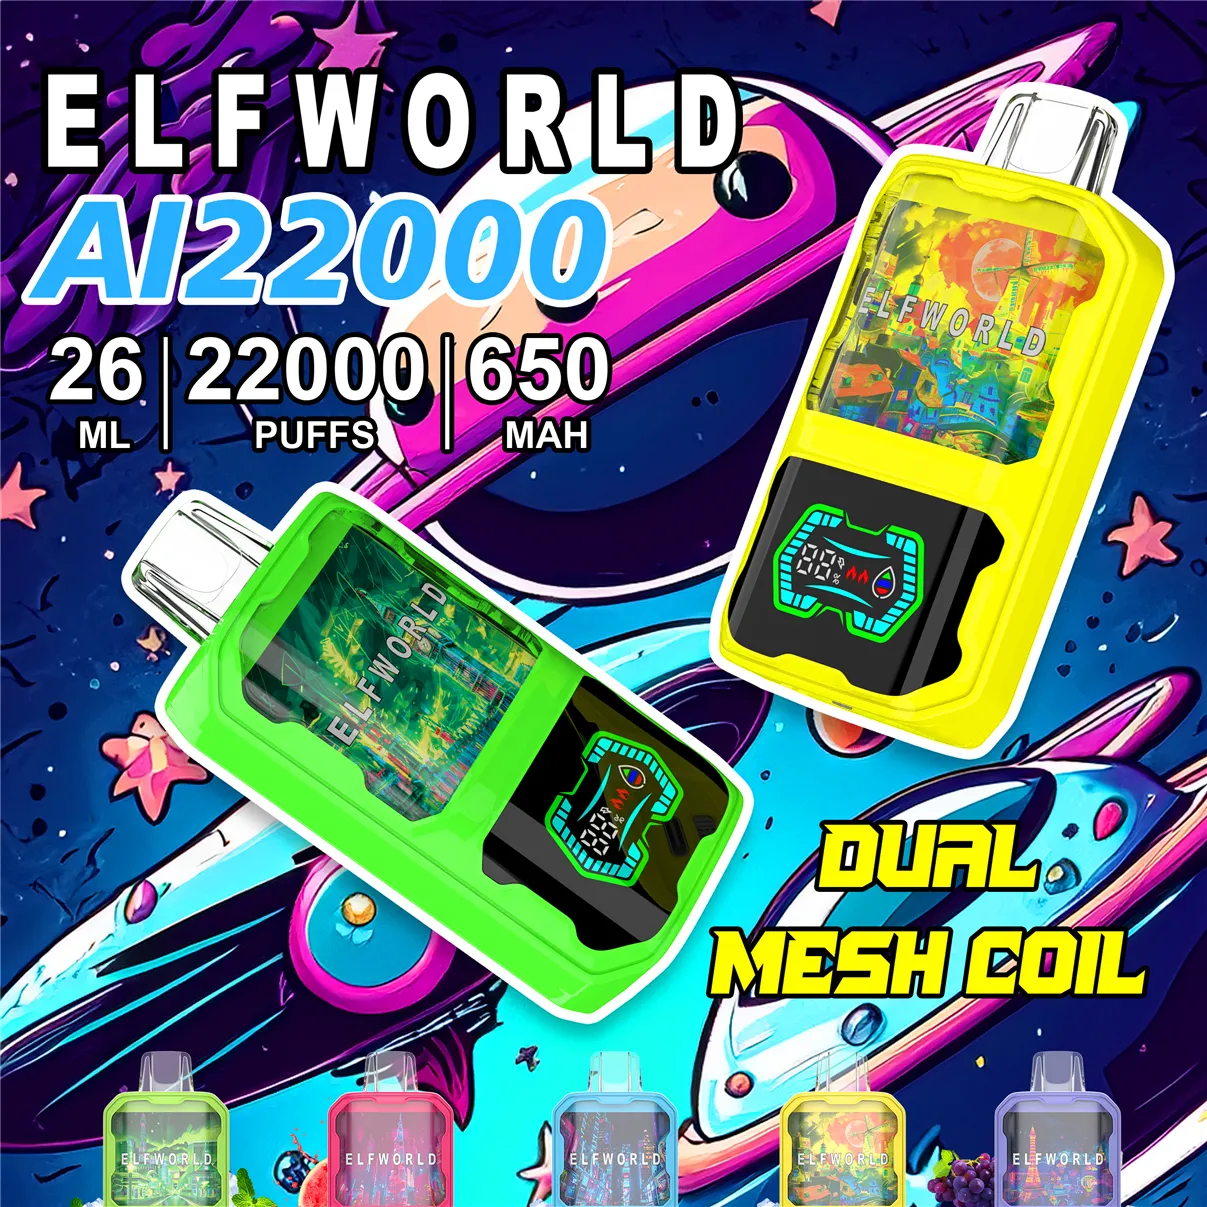 Elfworld Puff 2800 7000 9000 10000 12000 15000 20000 9K 12K 15K 20K 20K Puffs Dostęp Elf Elf Elf World Razz Bar DeSechable Vaper Tornado elektroniczny papieros